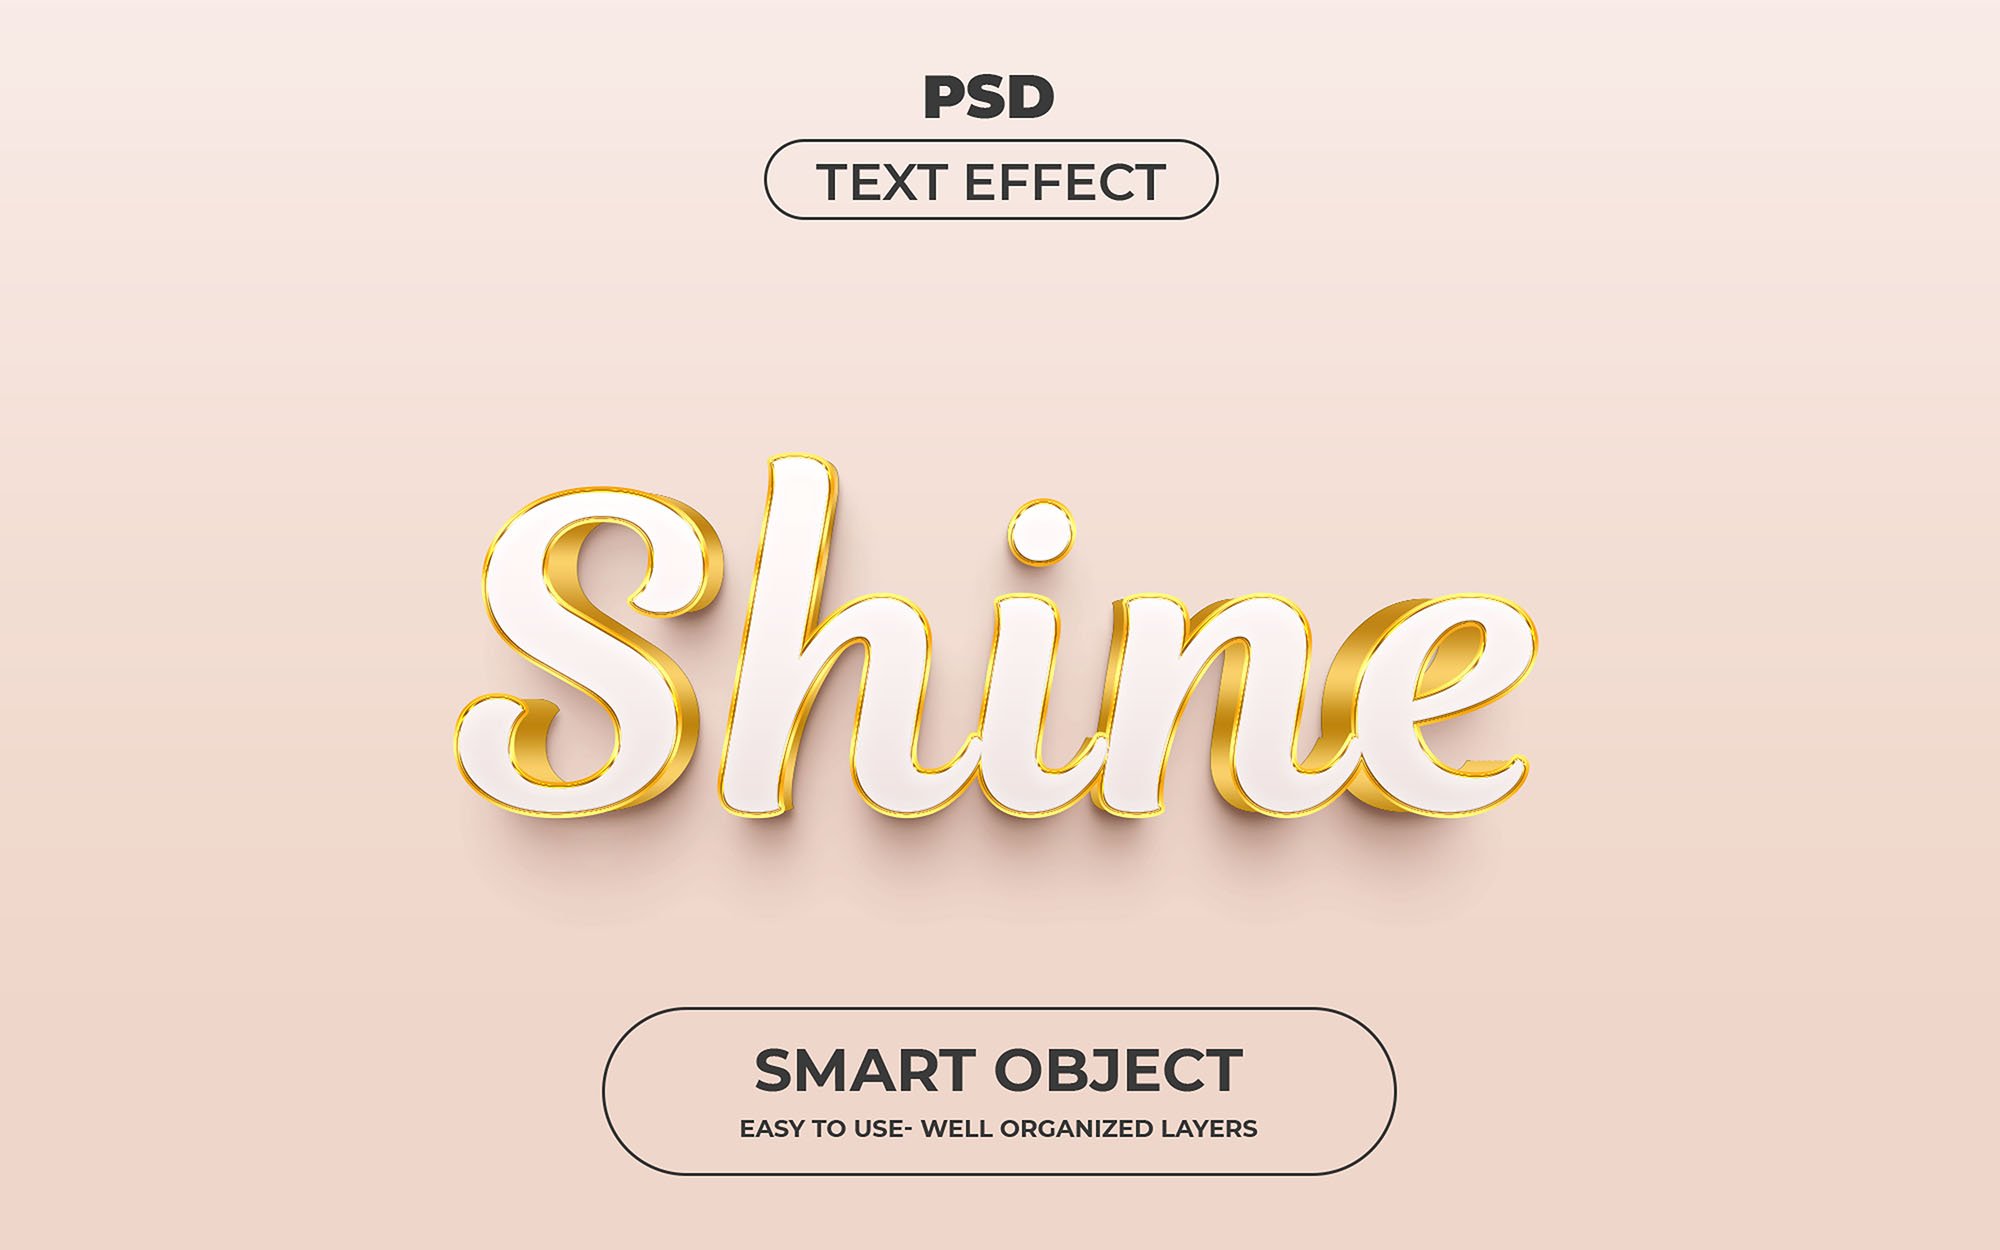 Shine 3D Editable psd Text Effectcover image.